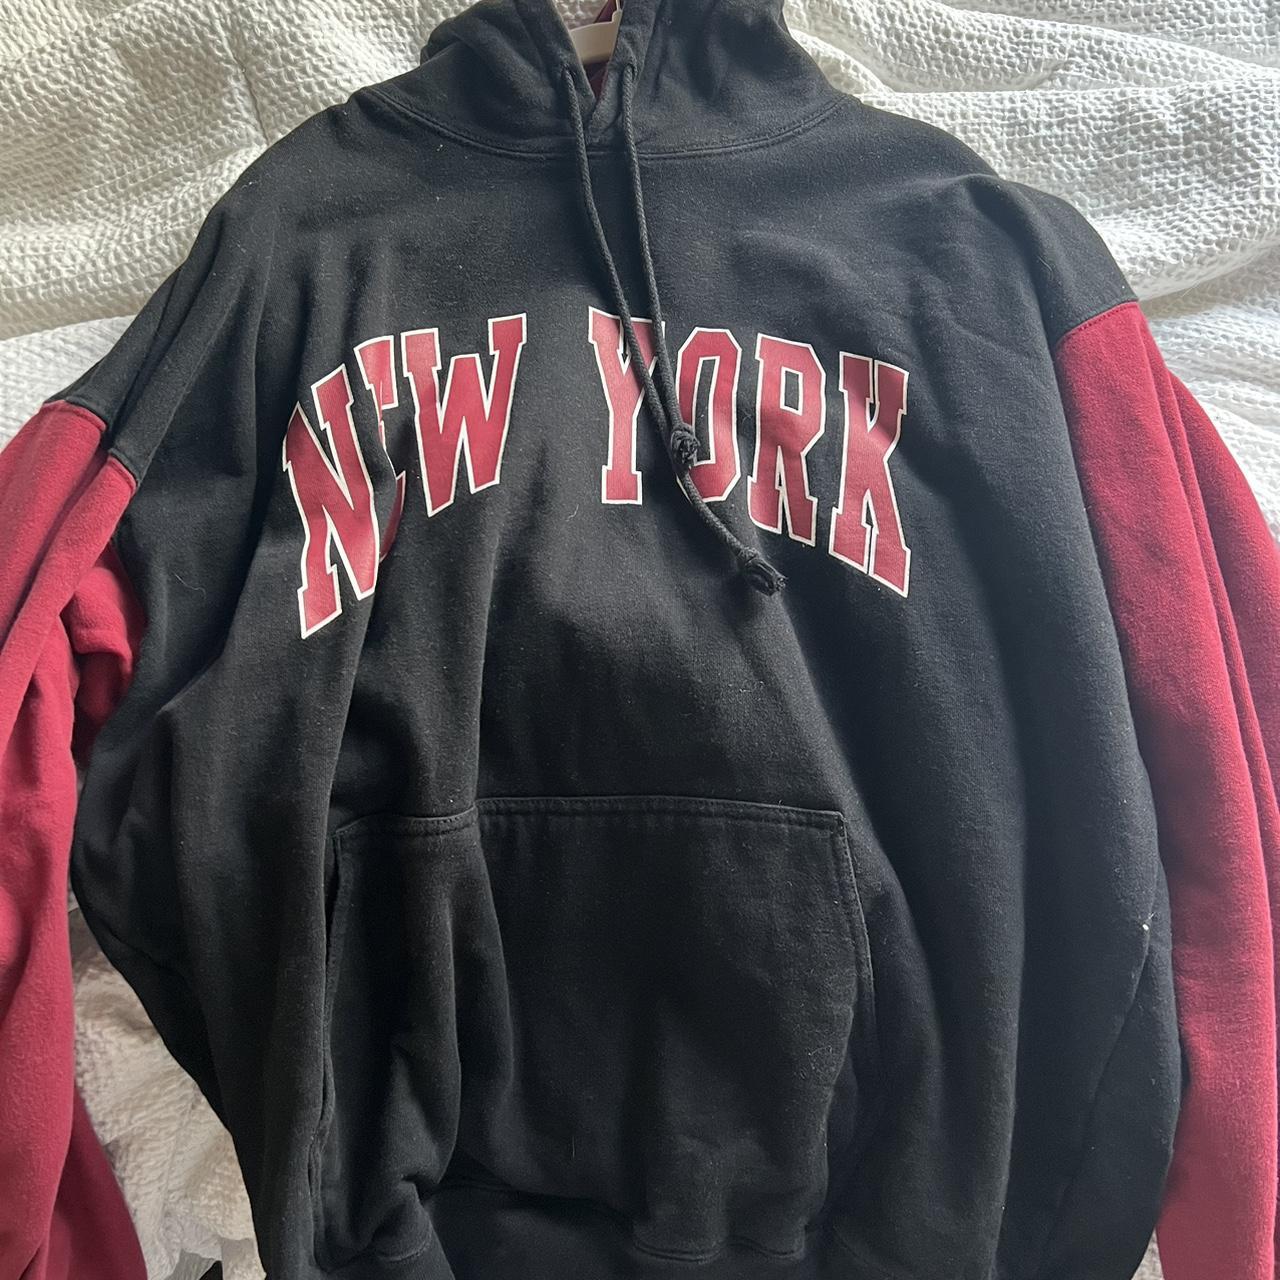 Brandy Melville “New York” hoodie. Classic black